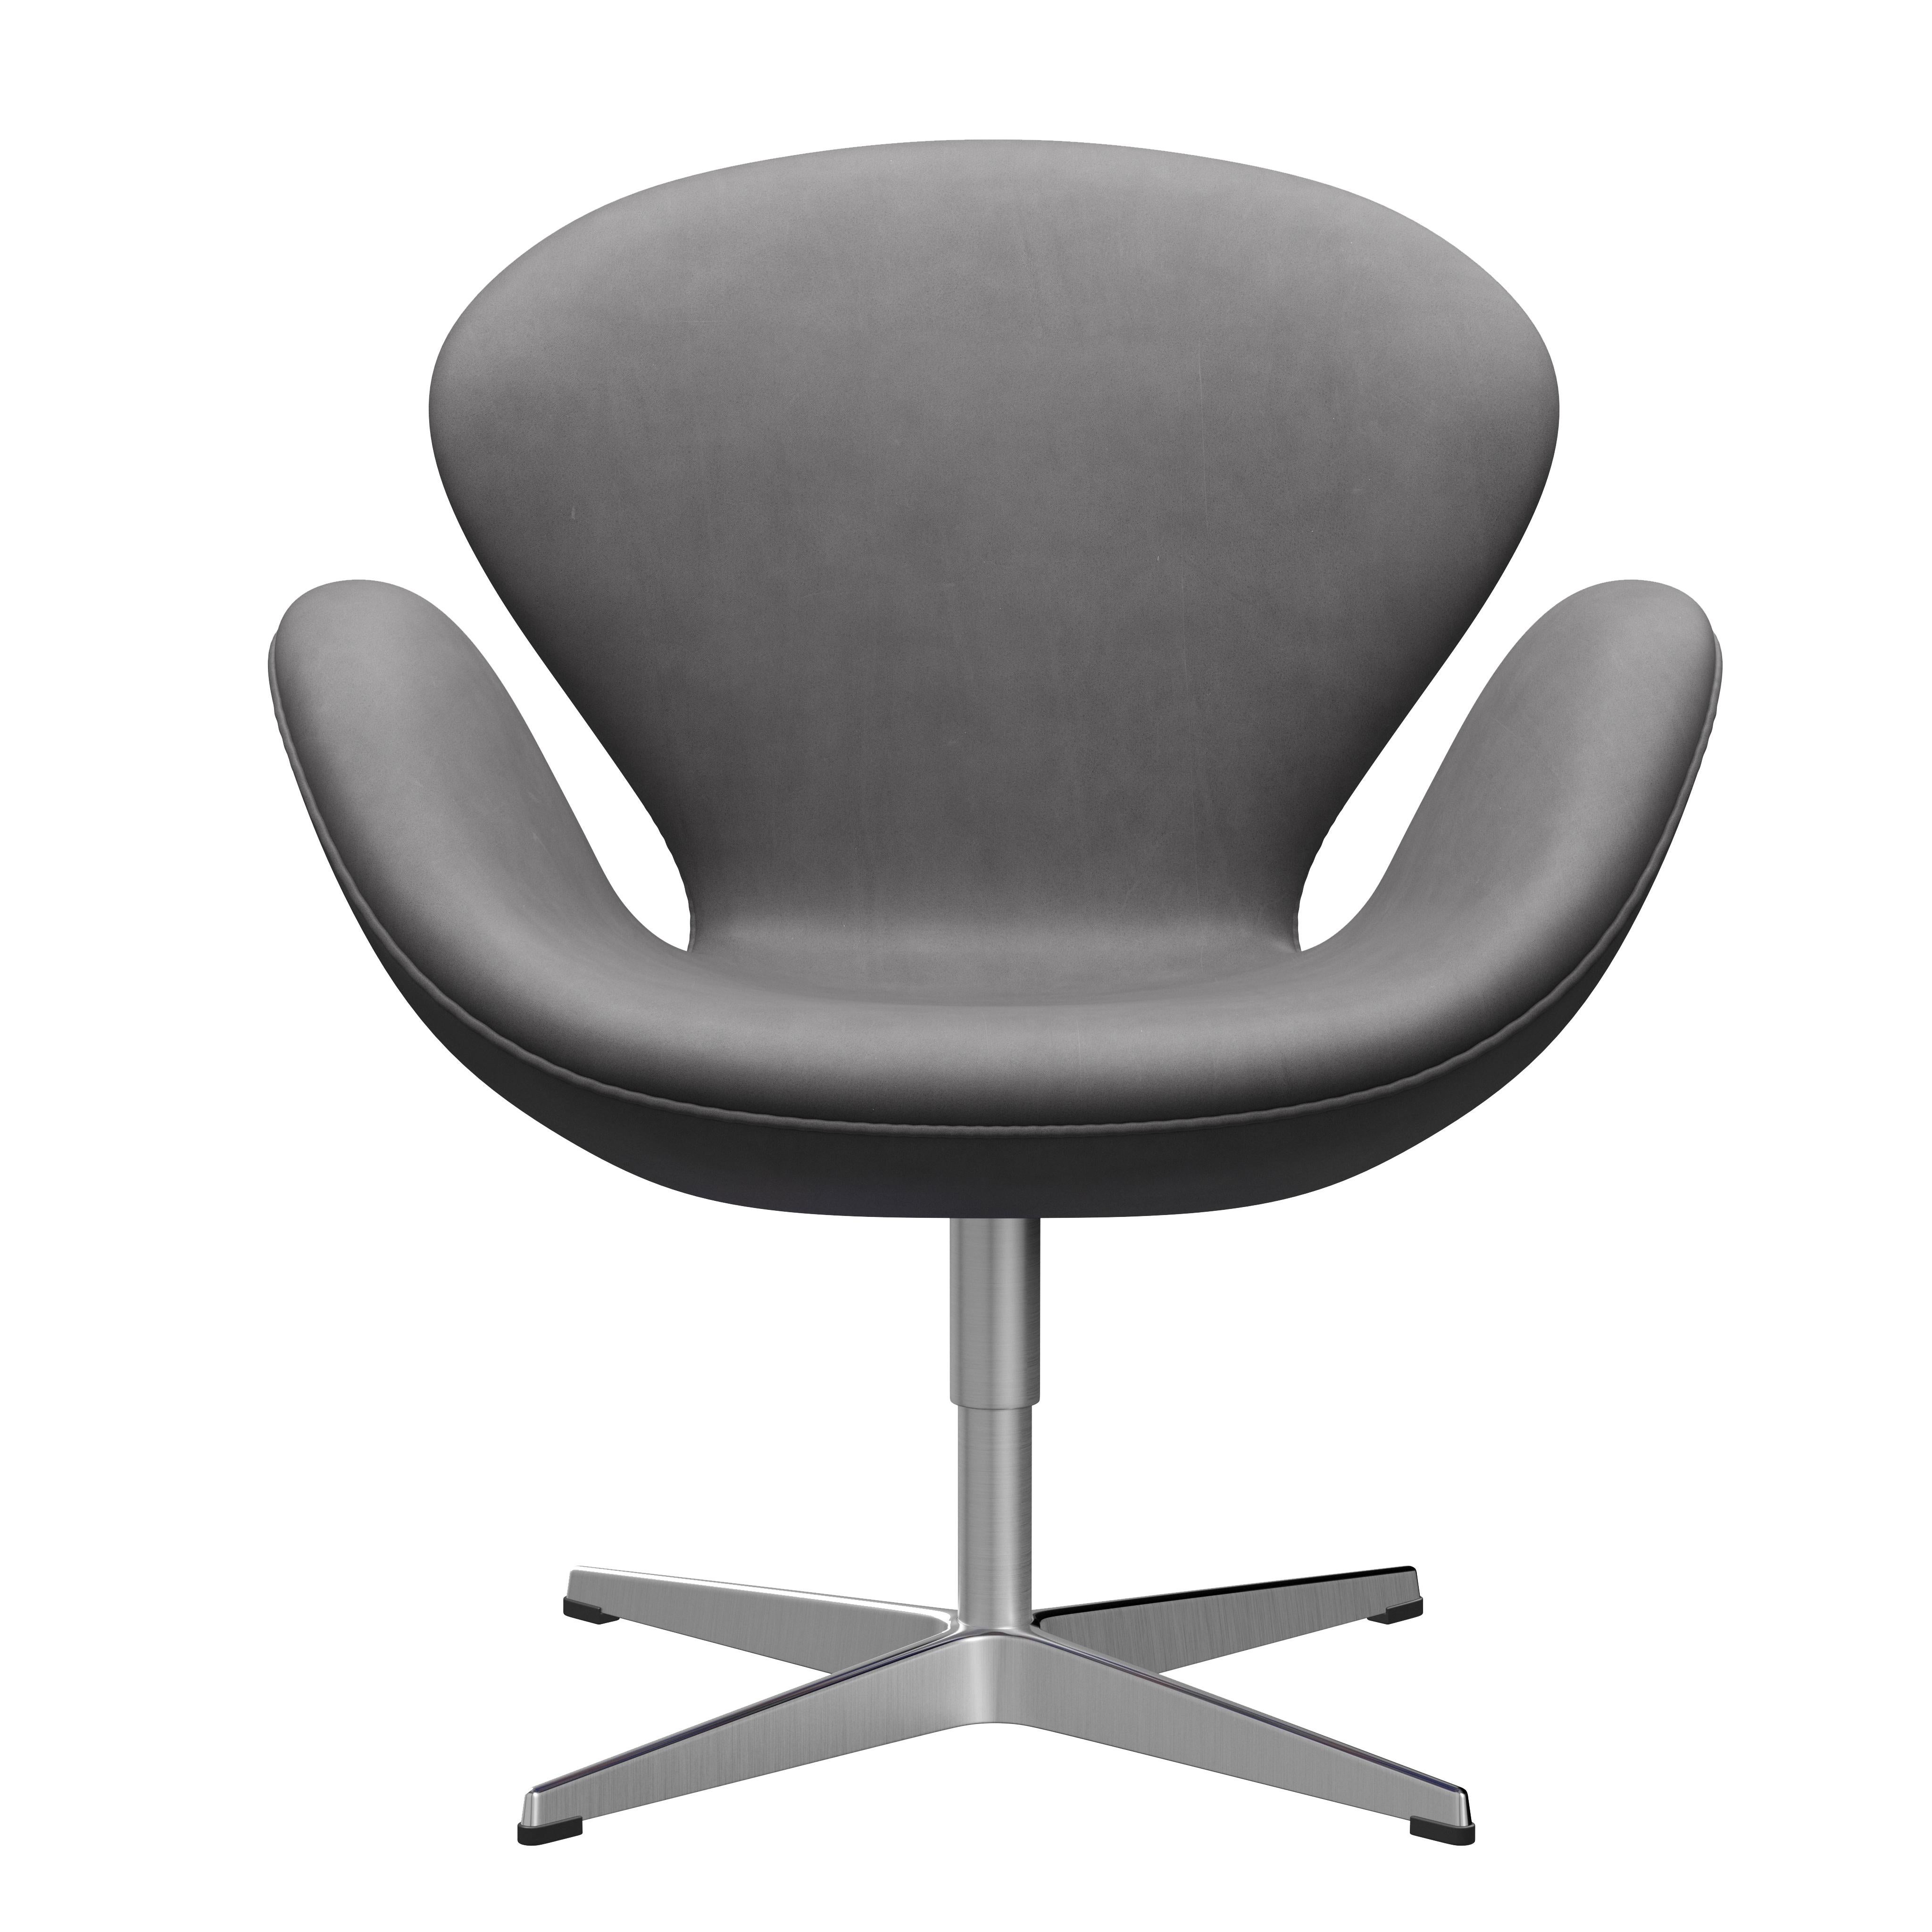 Arne Jacobsen 'Swan' Chair for Fritz Hansen in Leather Upholstery (Cat. 5) For Sale 8